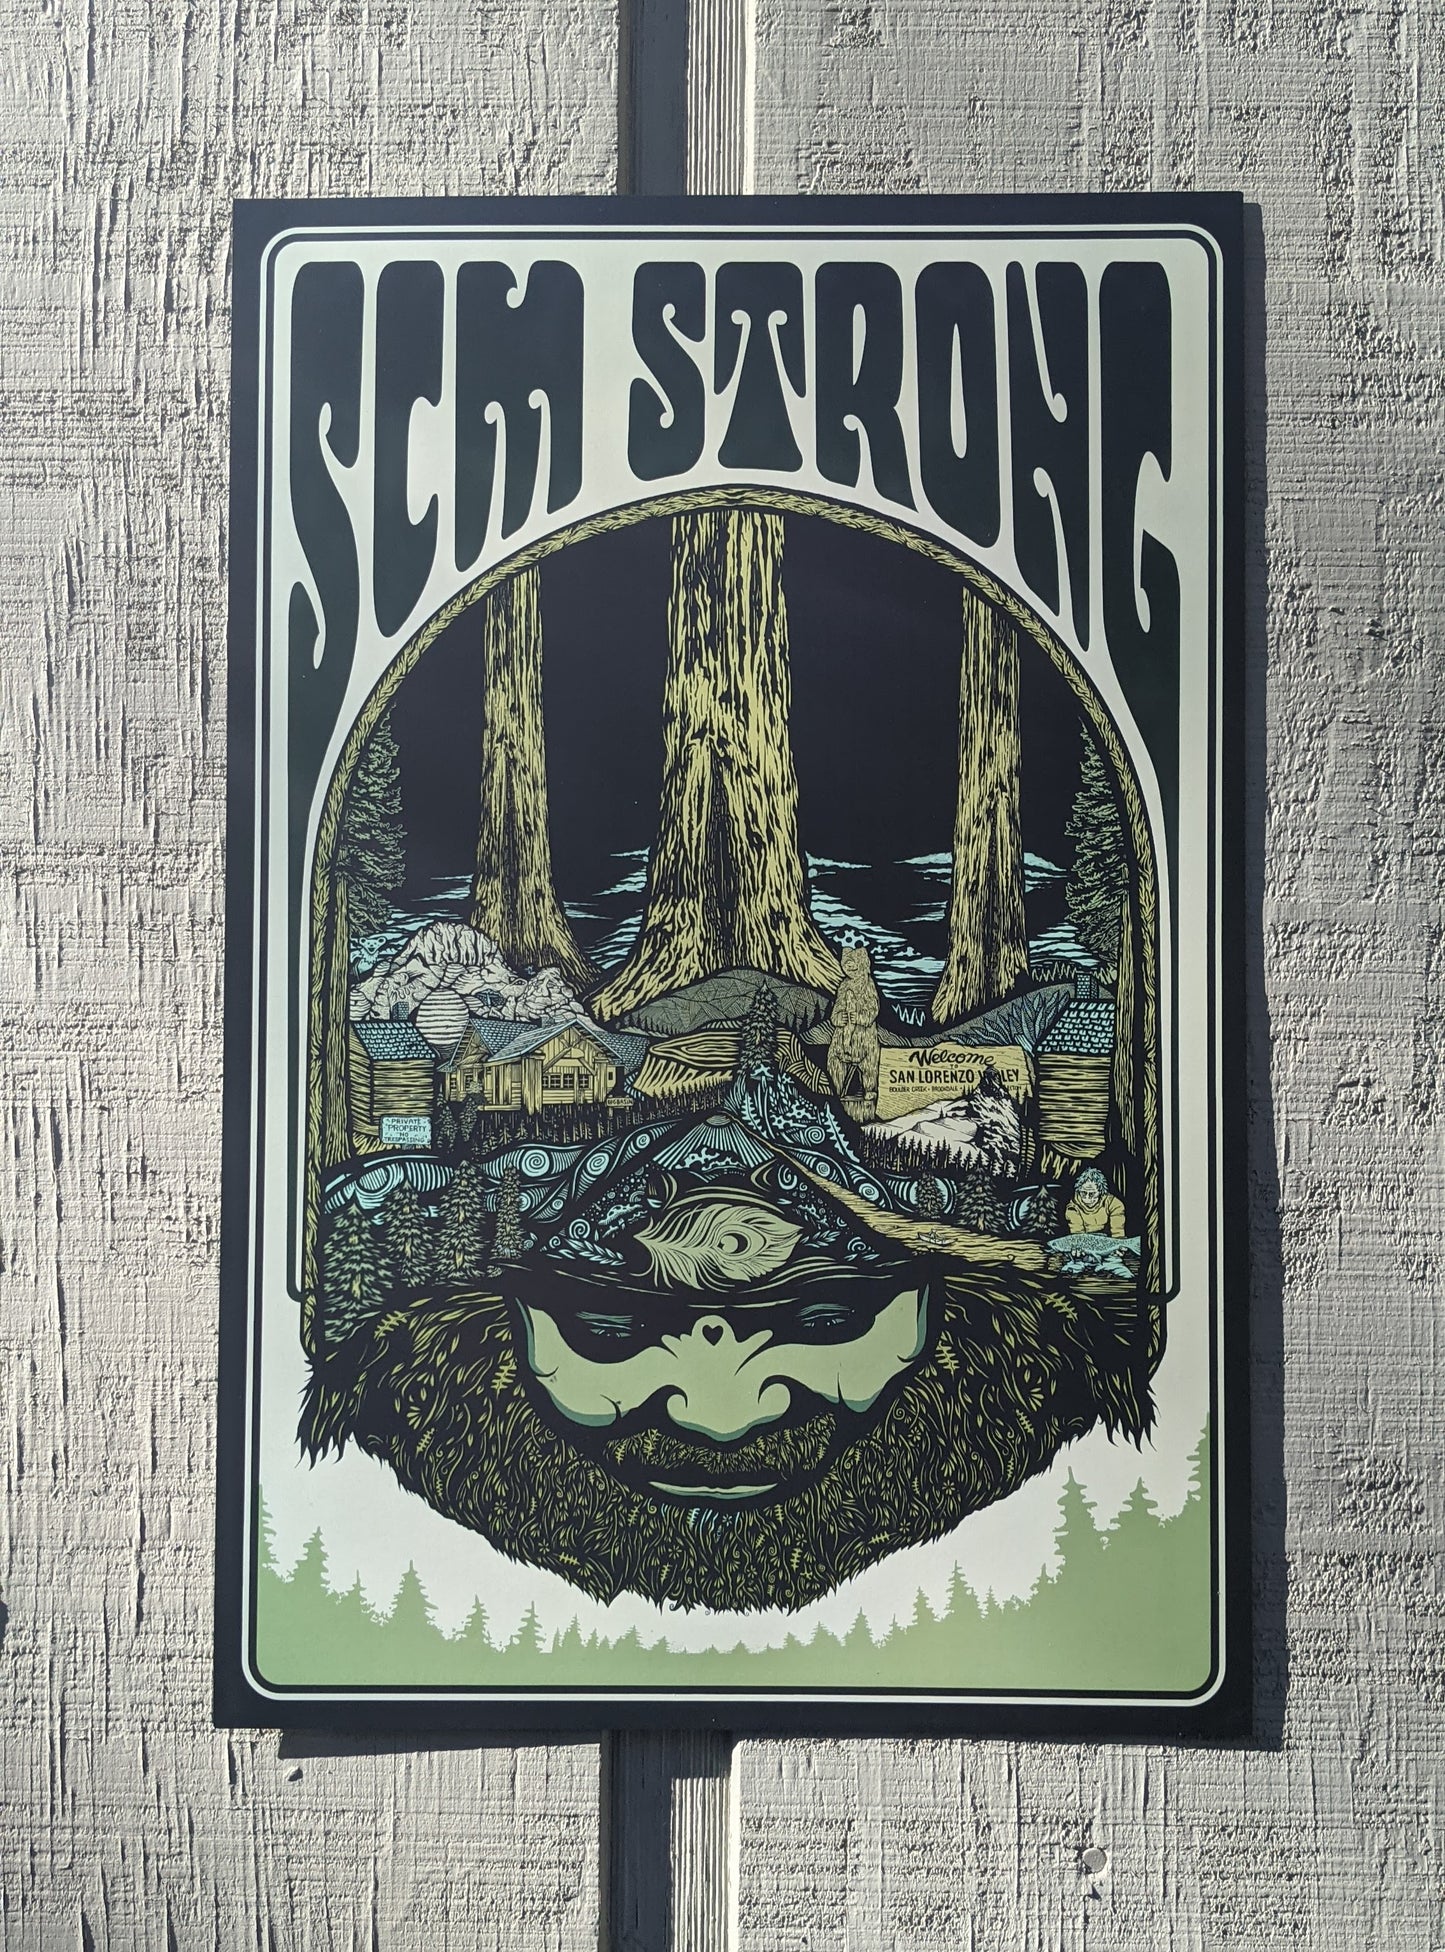 SCM Strong poster by Nicky Gatson